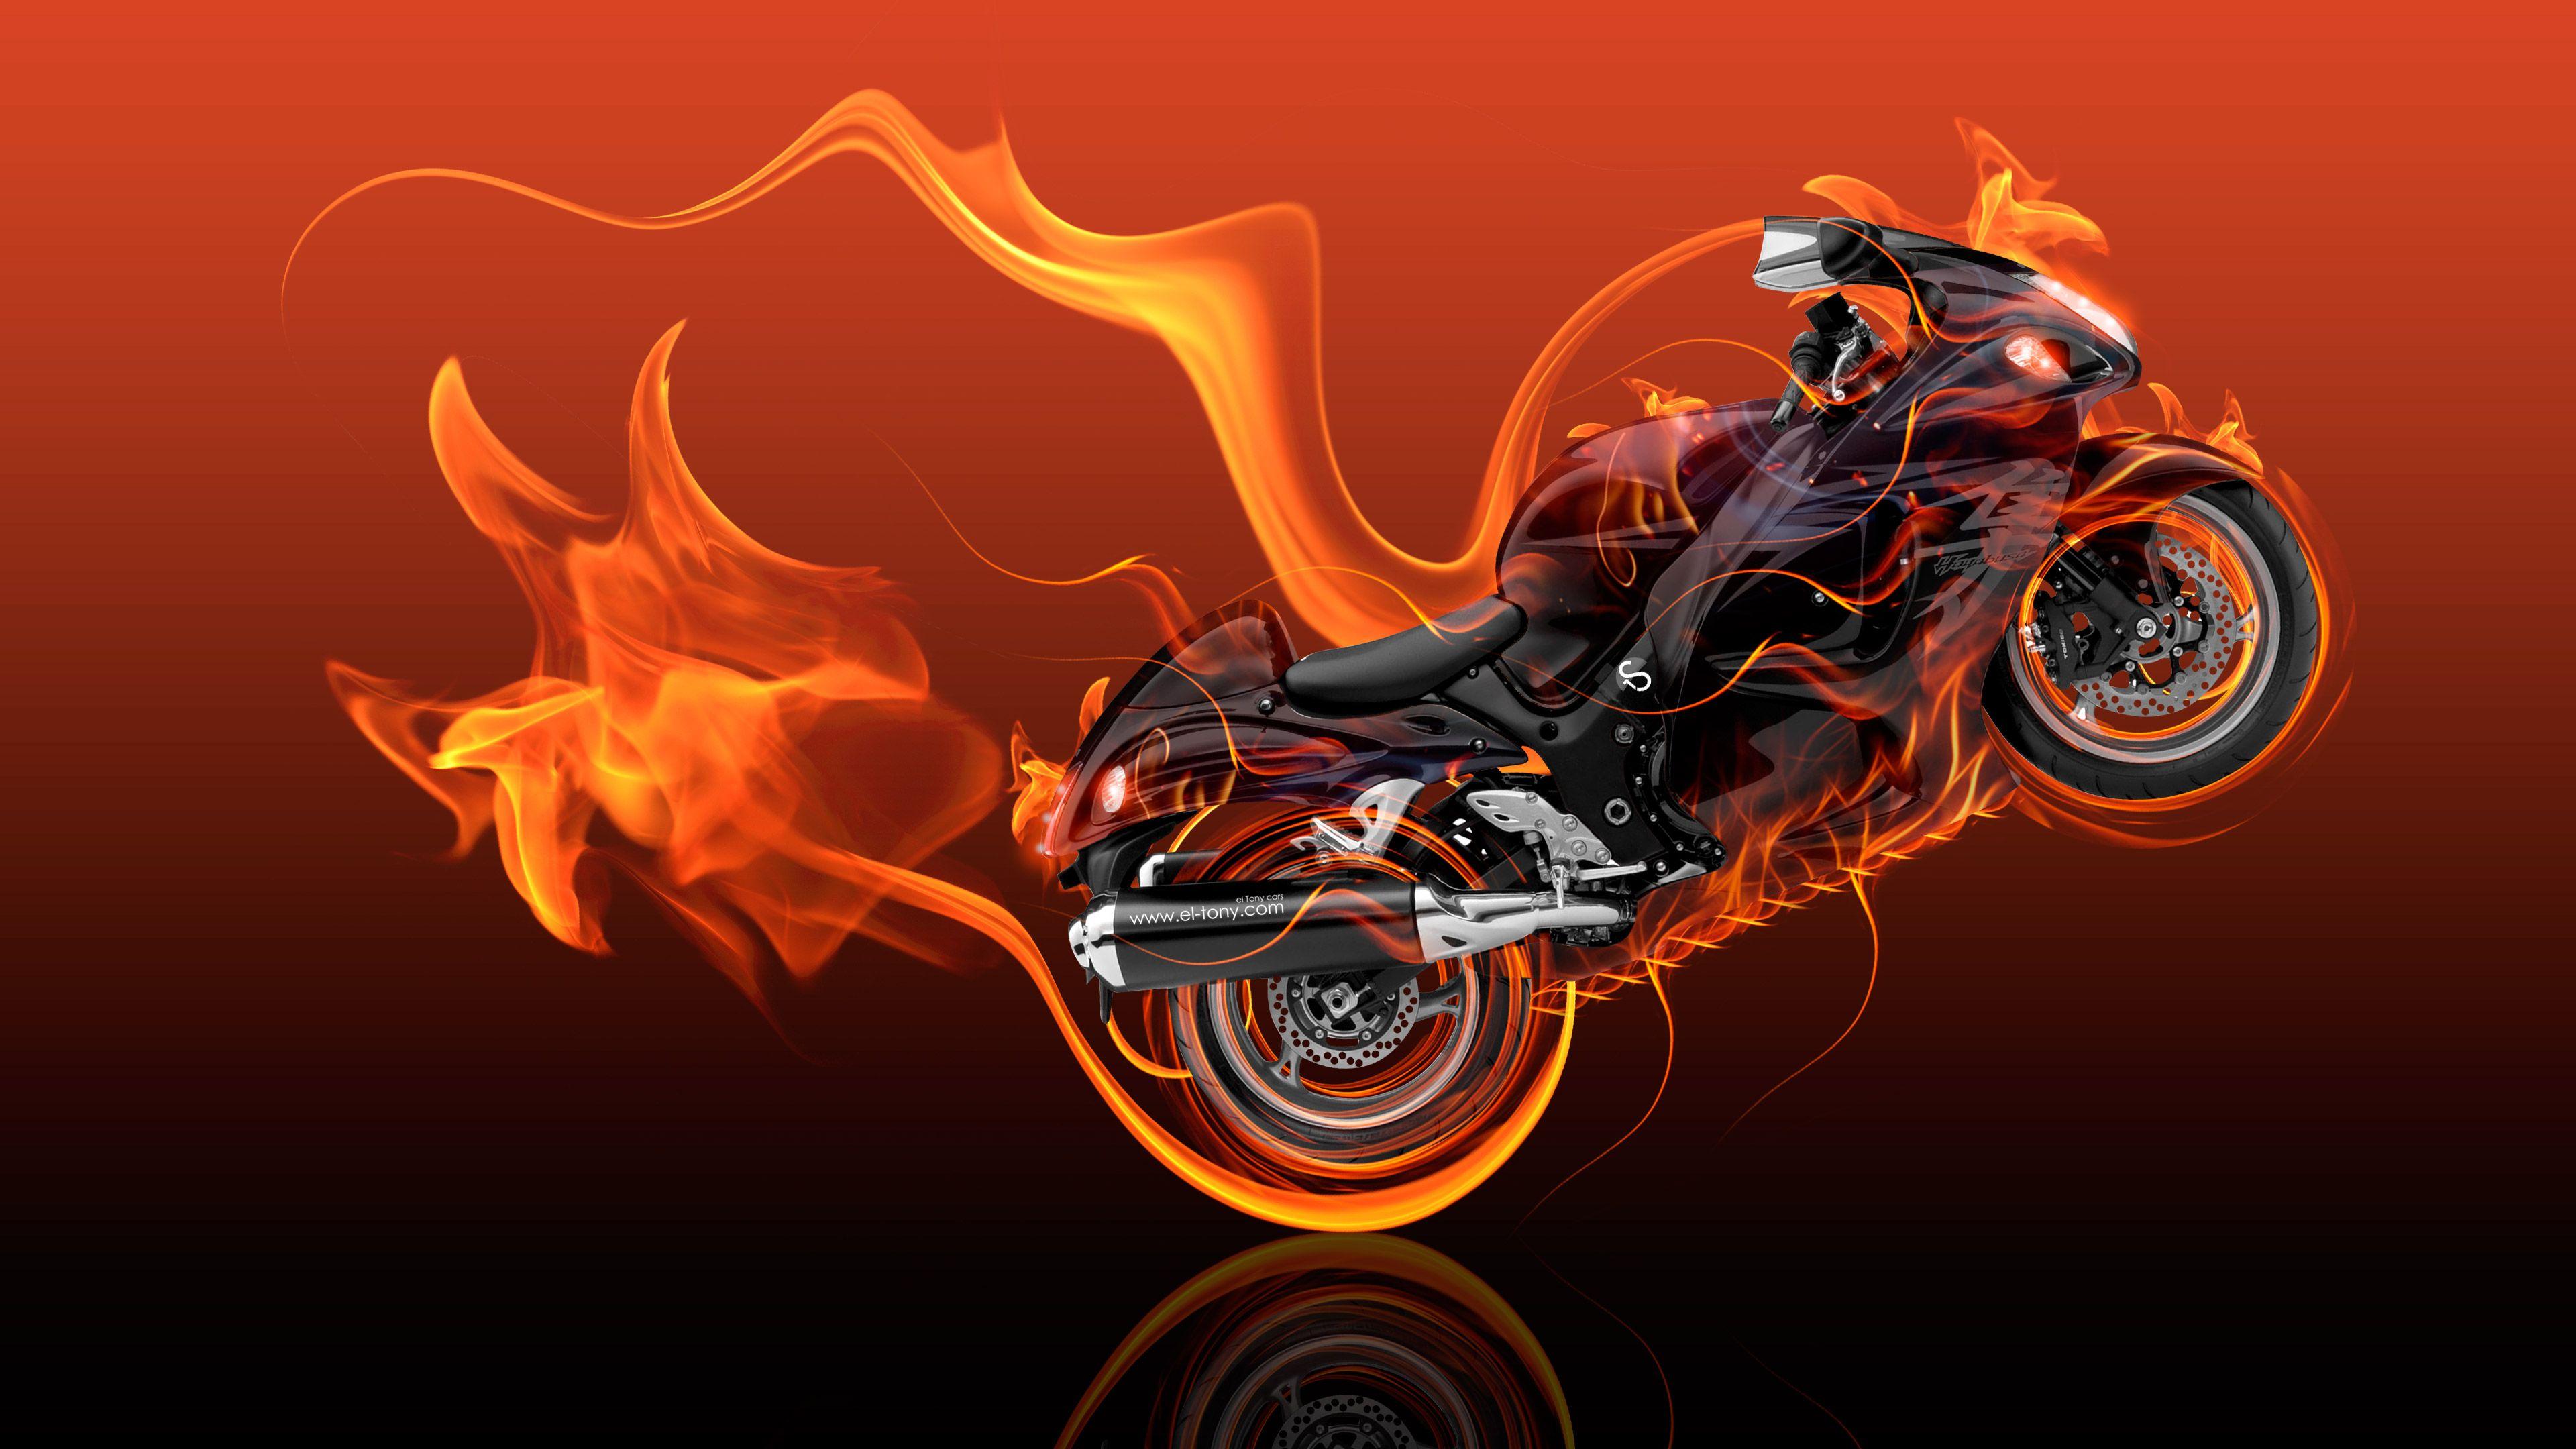 Moto Suzuki Hayabusa Side Super Fire Abstract Bike 2016 Wallpaper